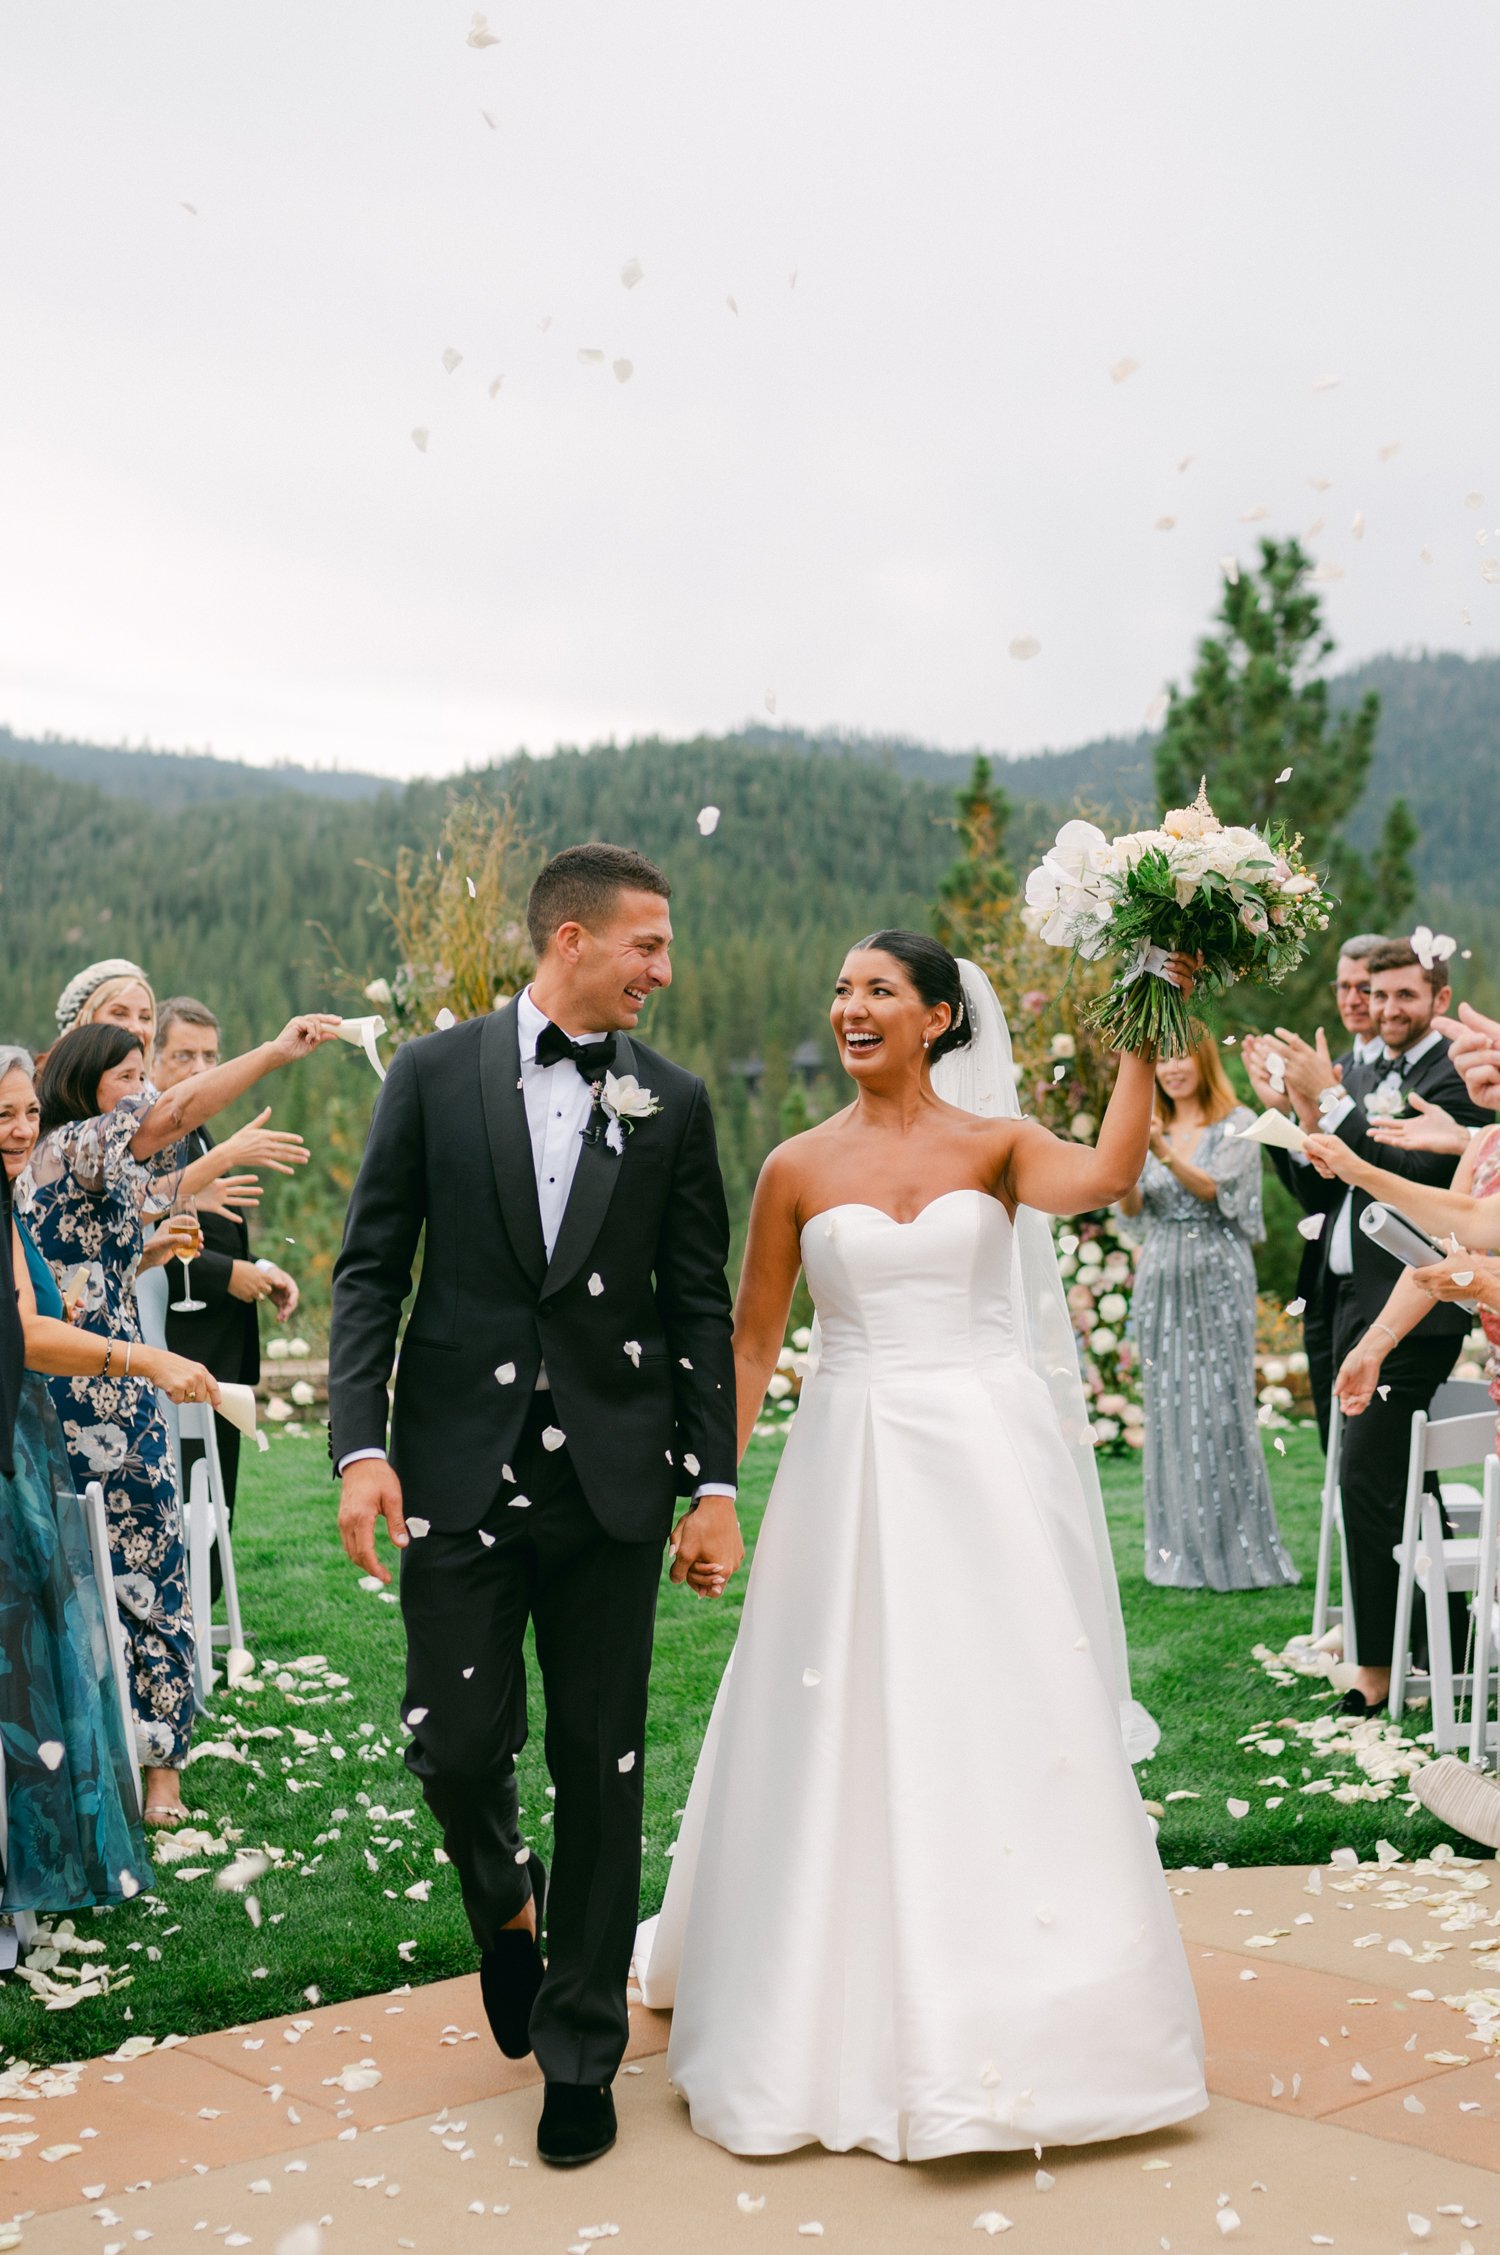 Best Day Ever - Lake Tahoe Wedding Photographer BlogAmerican Canyon Wedding